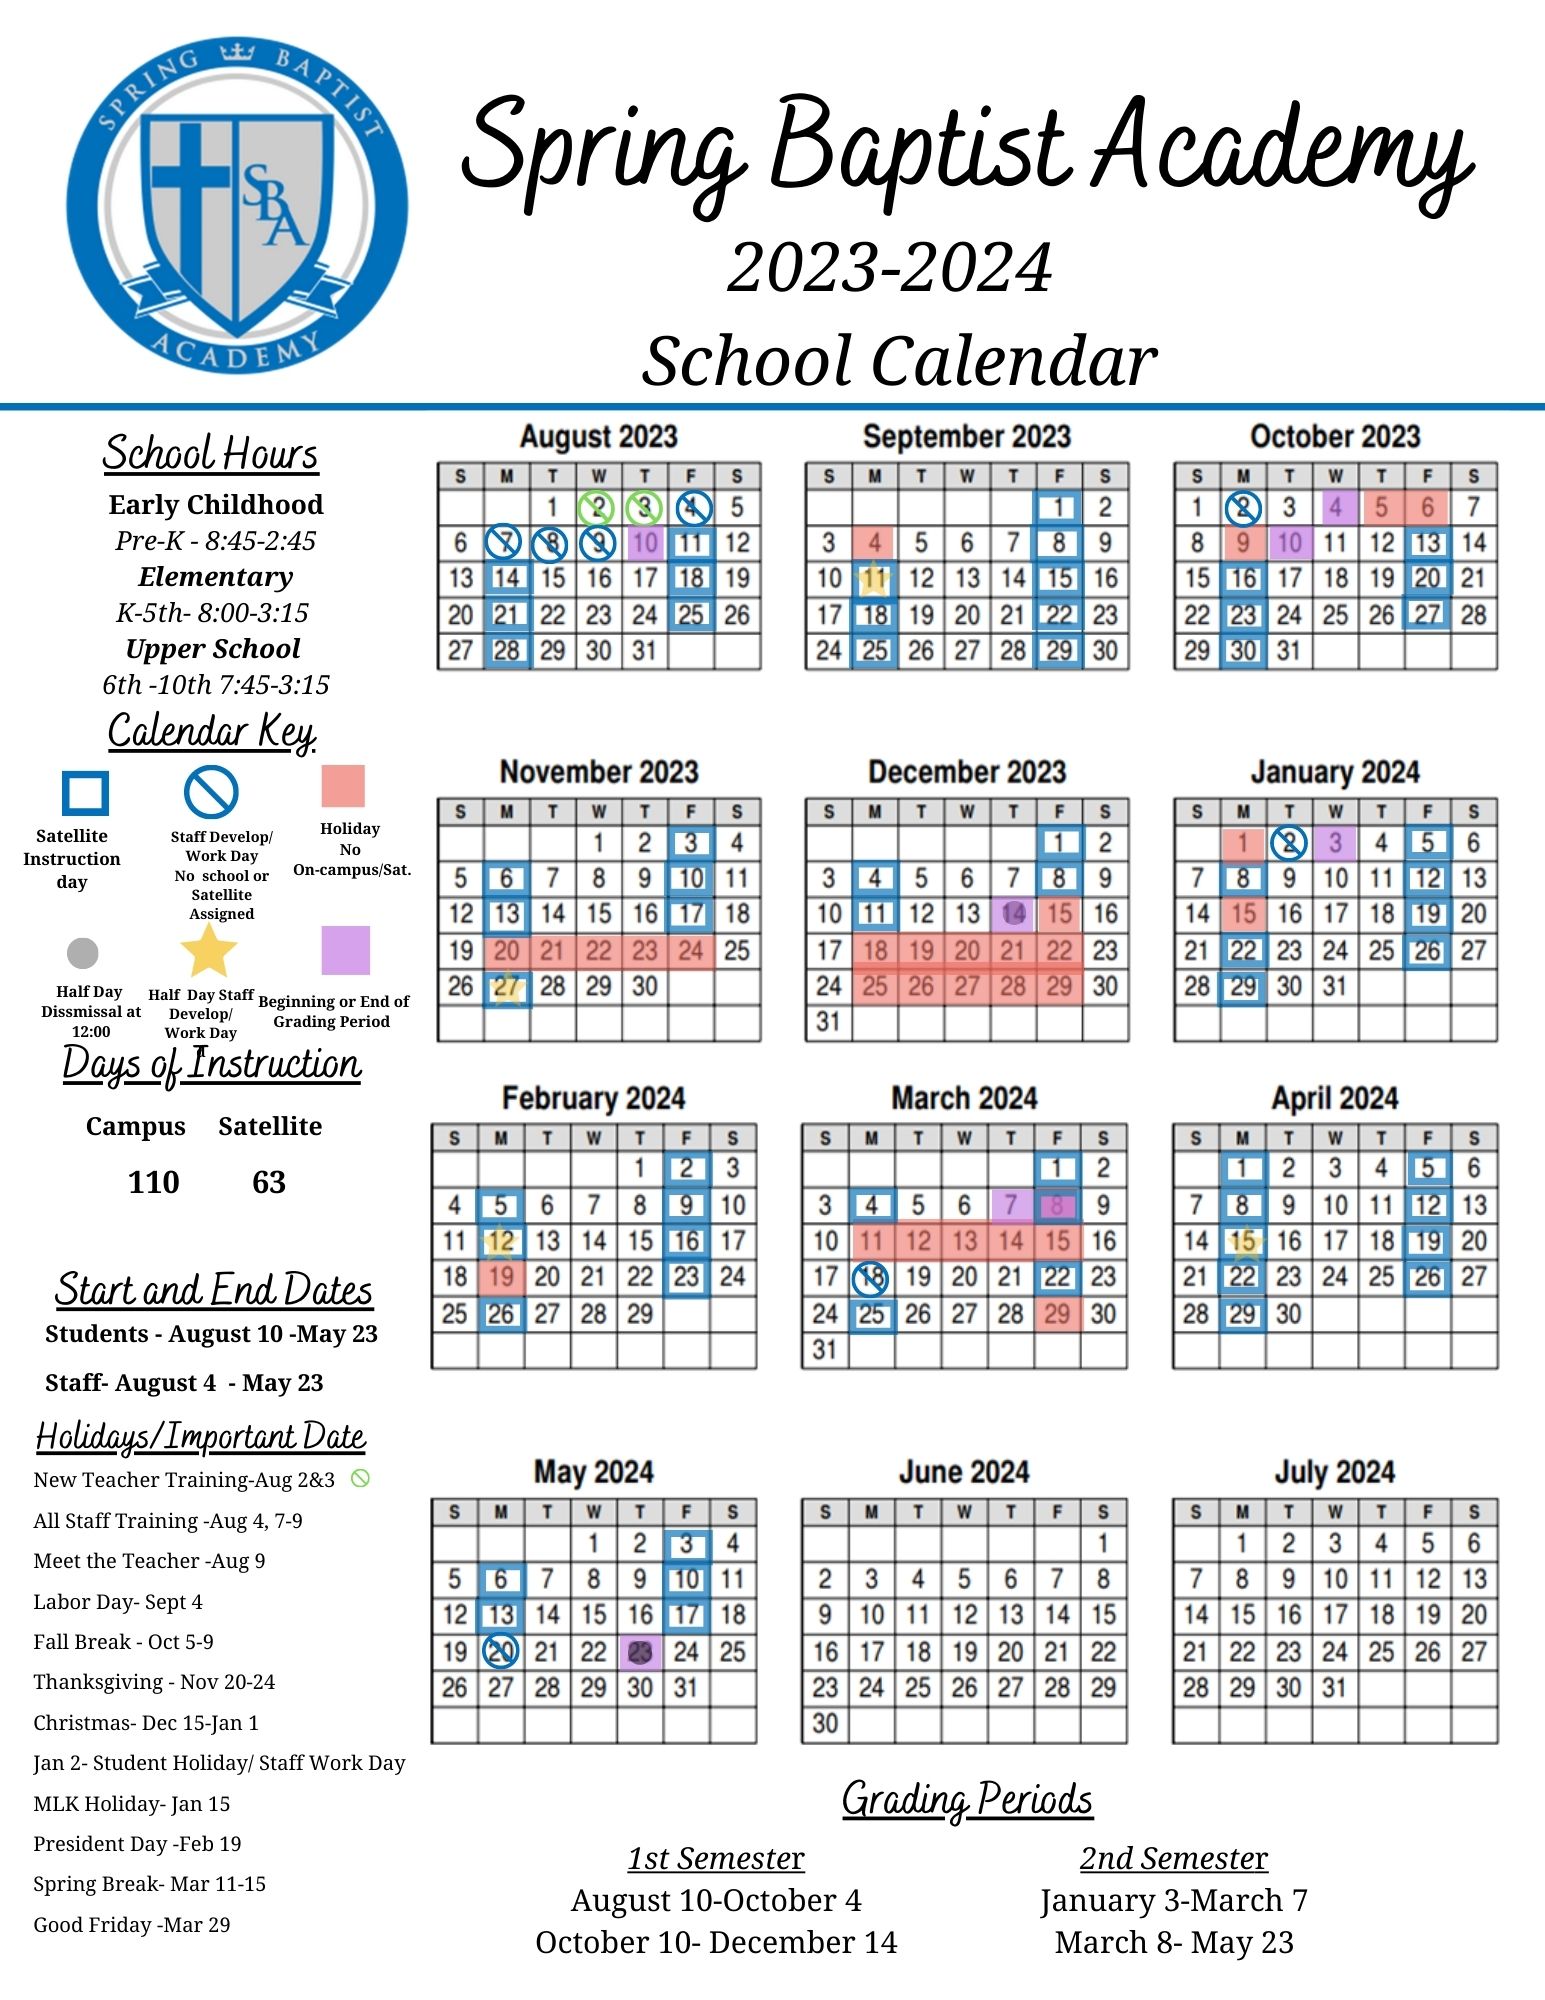 Spring Baptist Academy Calendar options